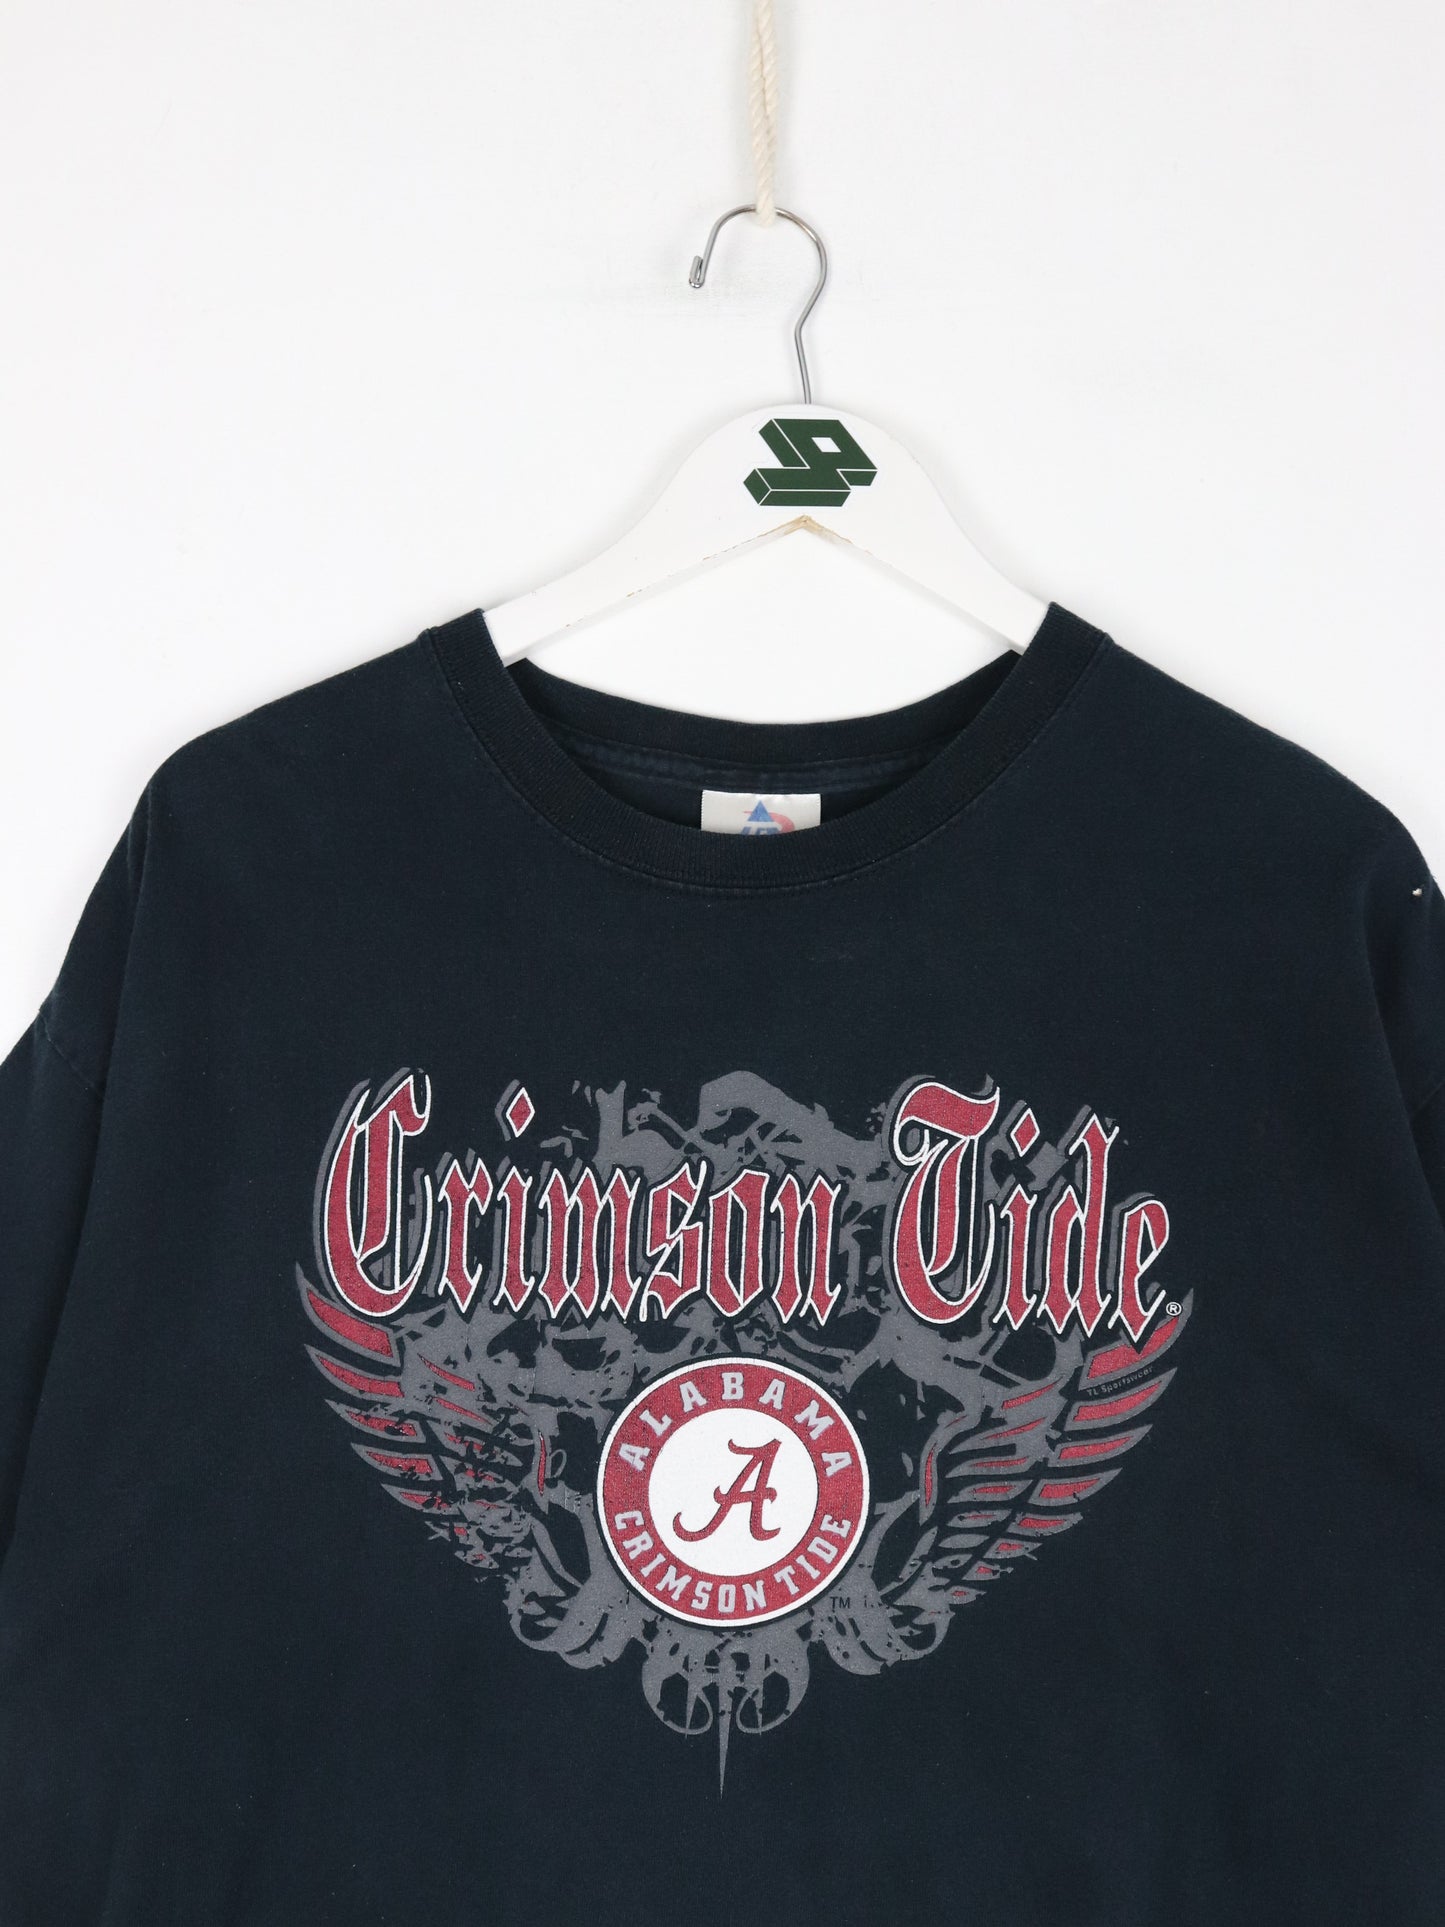 Alabama Crimson Tide T Shirt Mens XL Black College Football